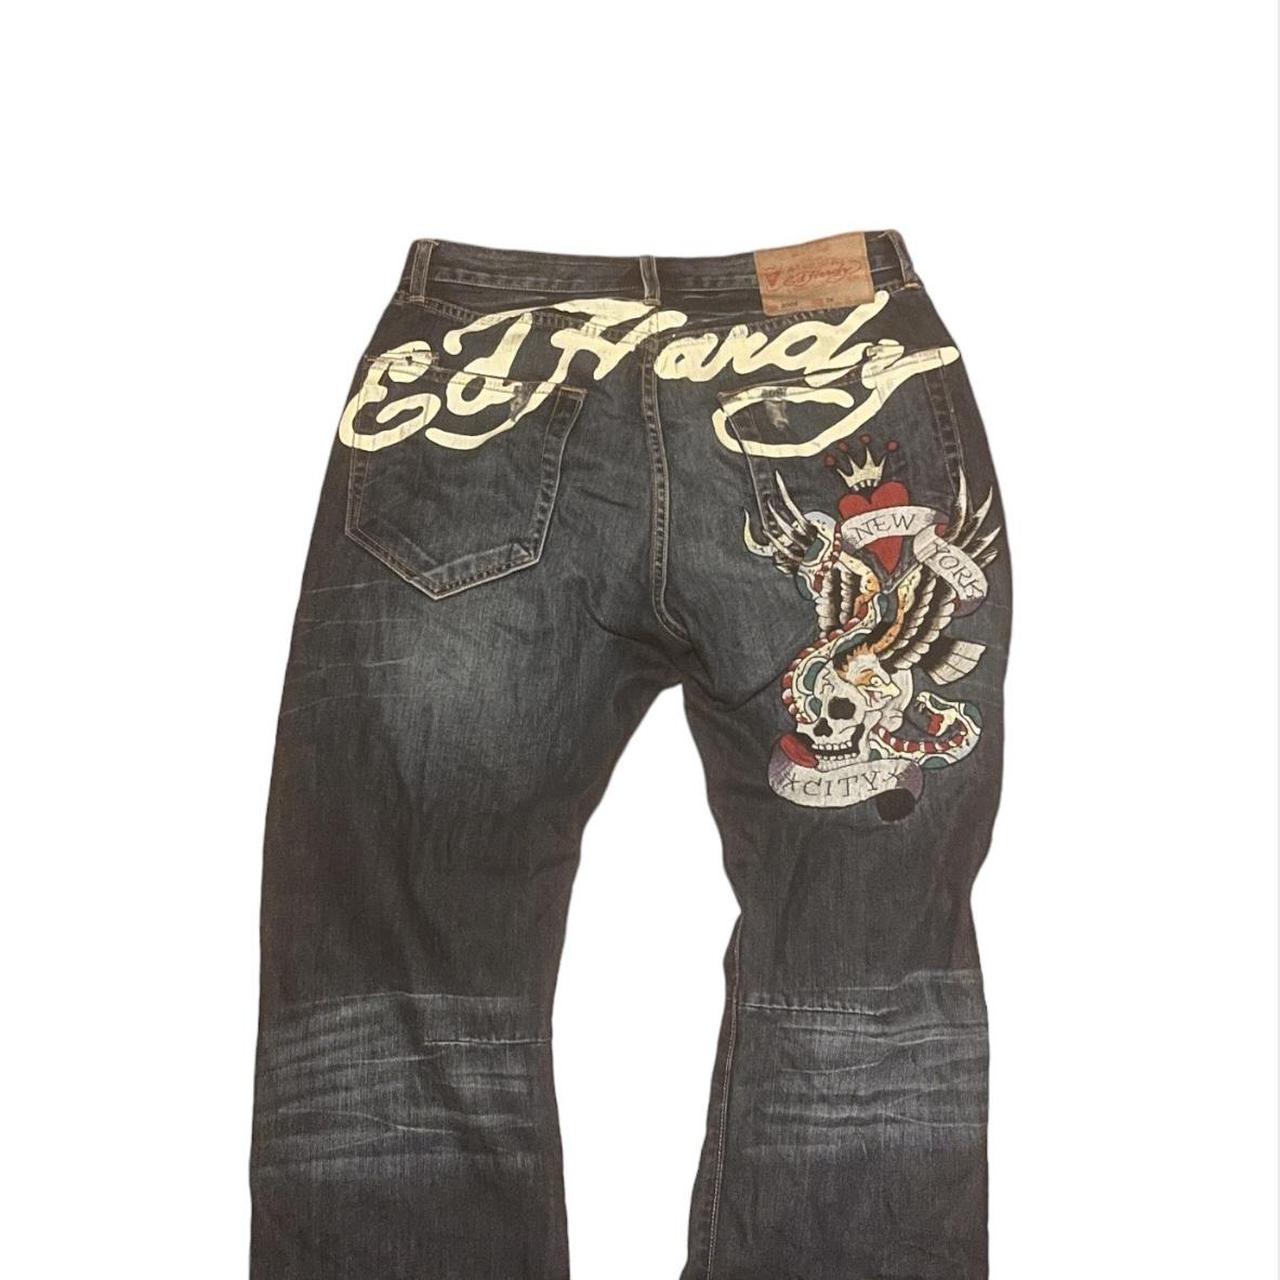 Ed Hardy Vintage Jeans, open to offers - Depop